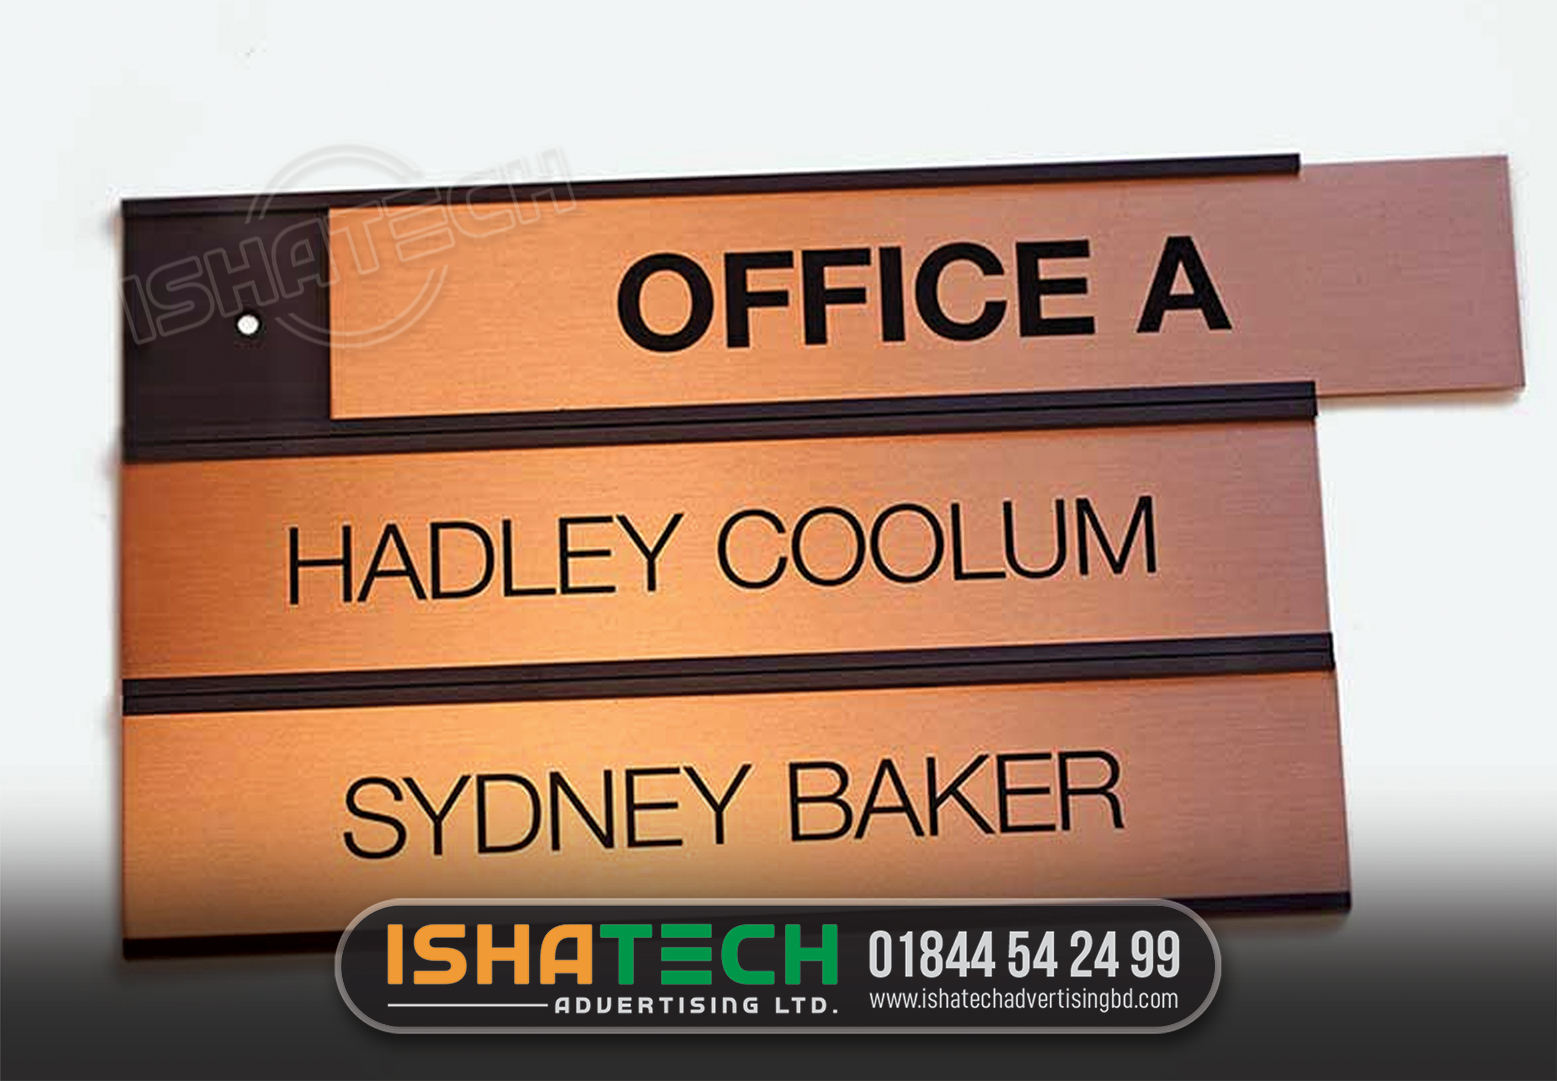 OFFICE HEADLEY COOLUM SYDNEY BAKER GOLDEN LETTER BD